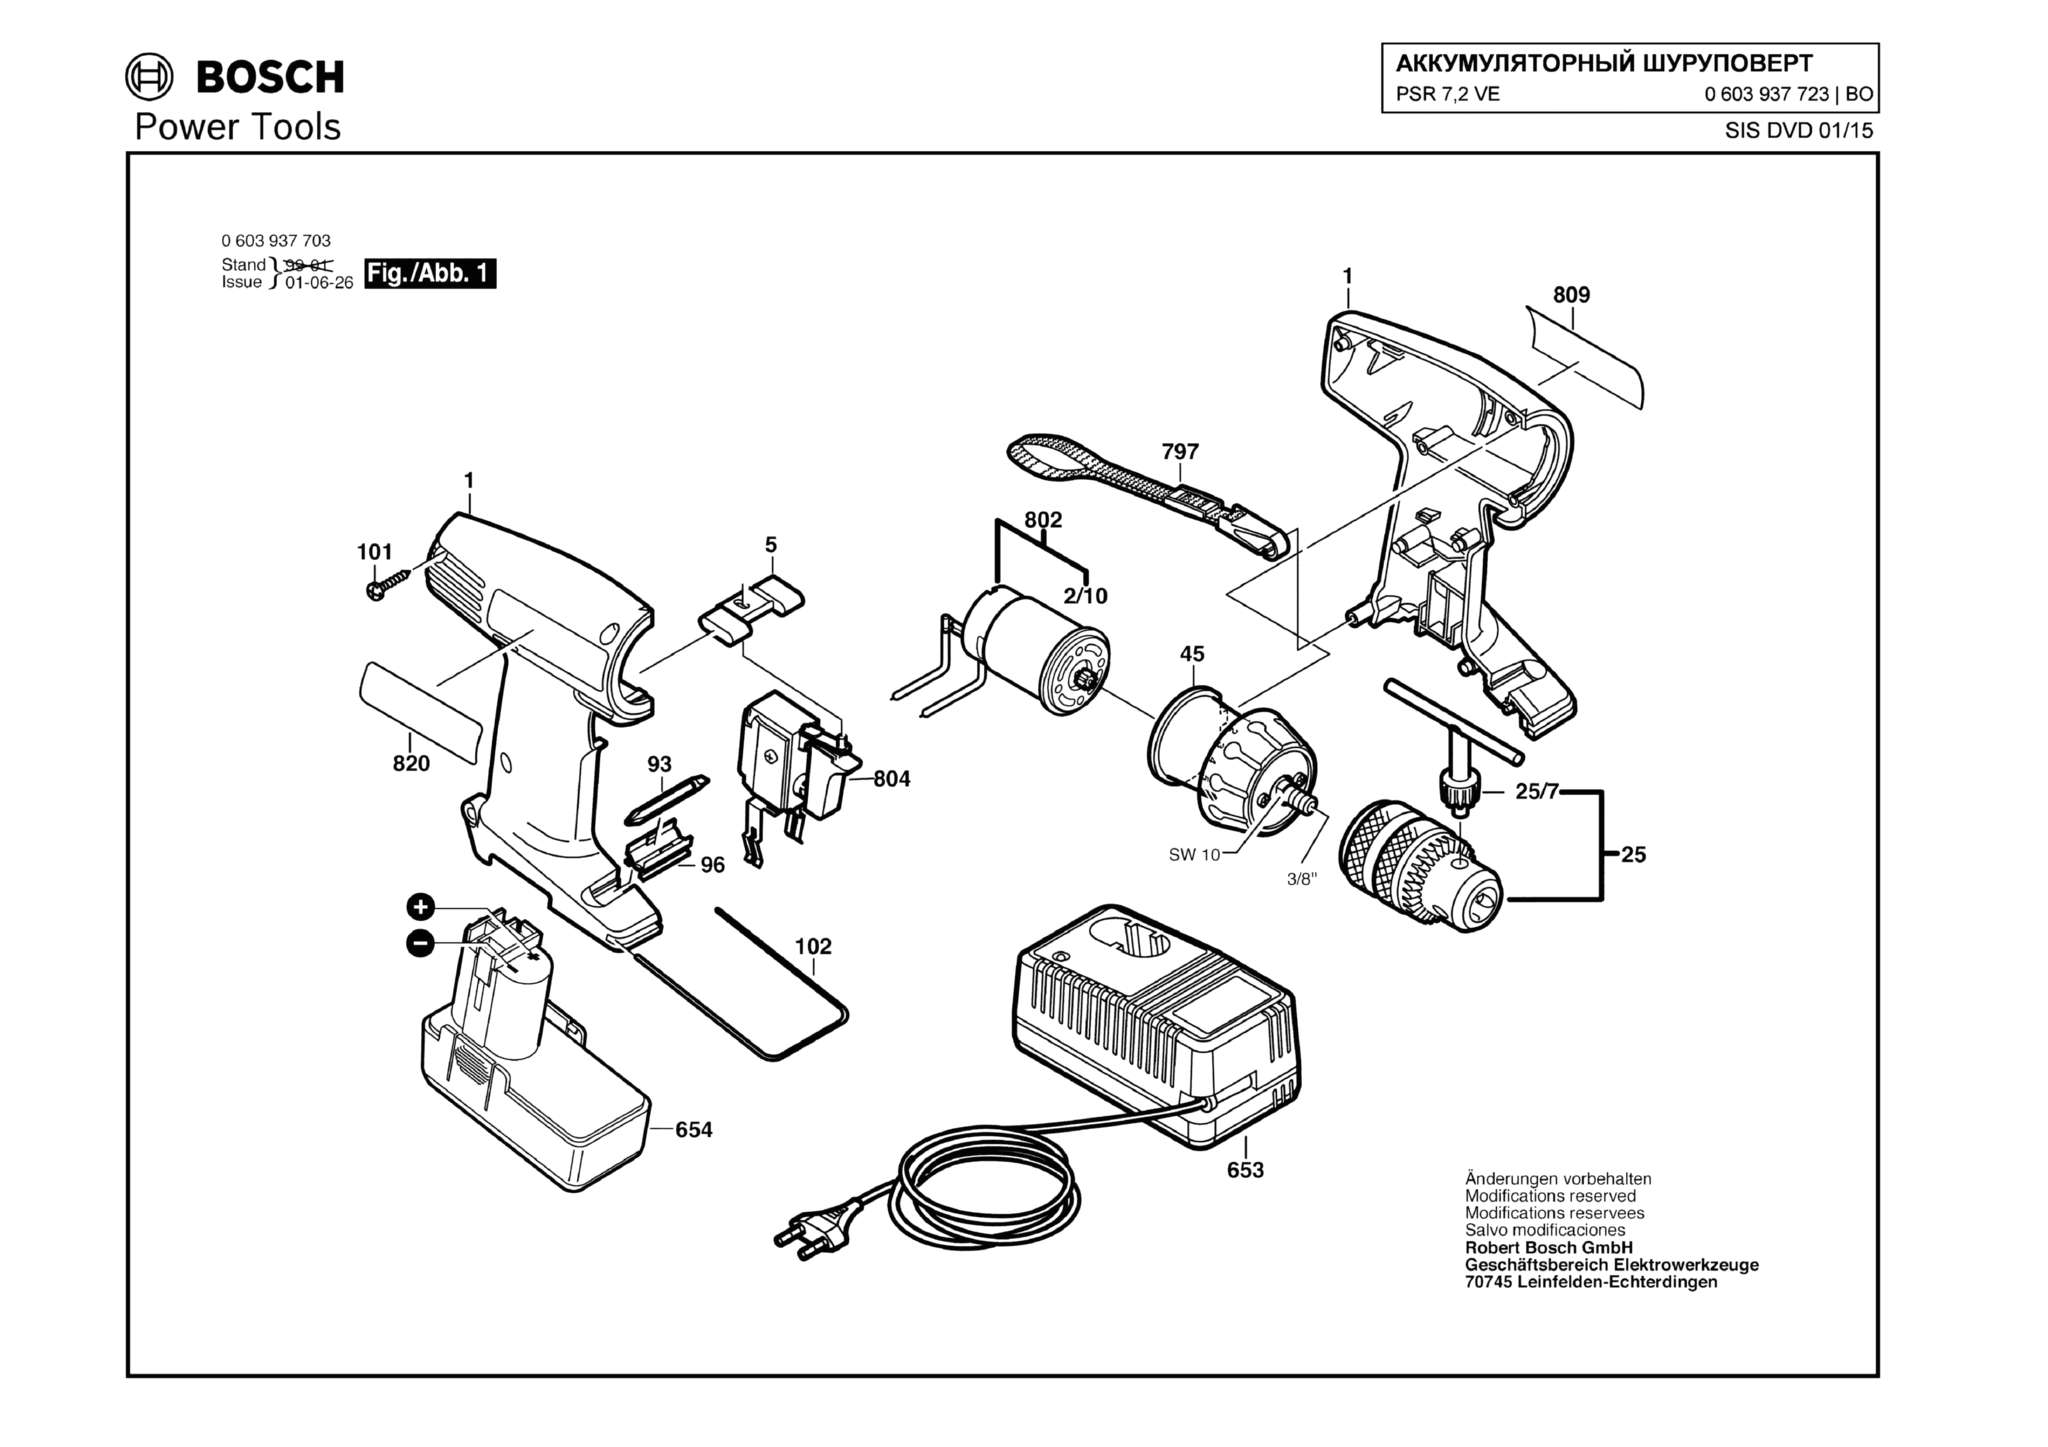 Запчасти, схема и деталировка Bosch PSR 7,2 VE (ТИП 0603937723)